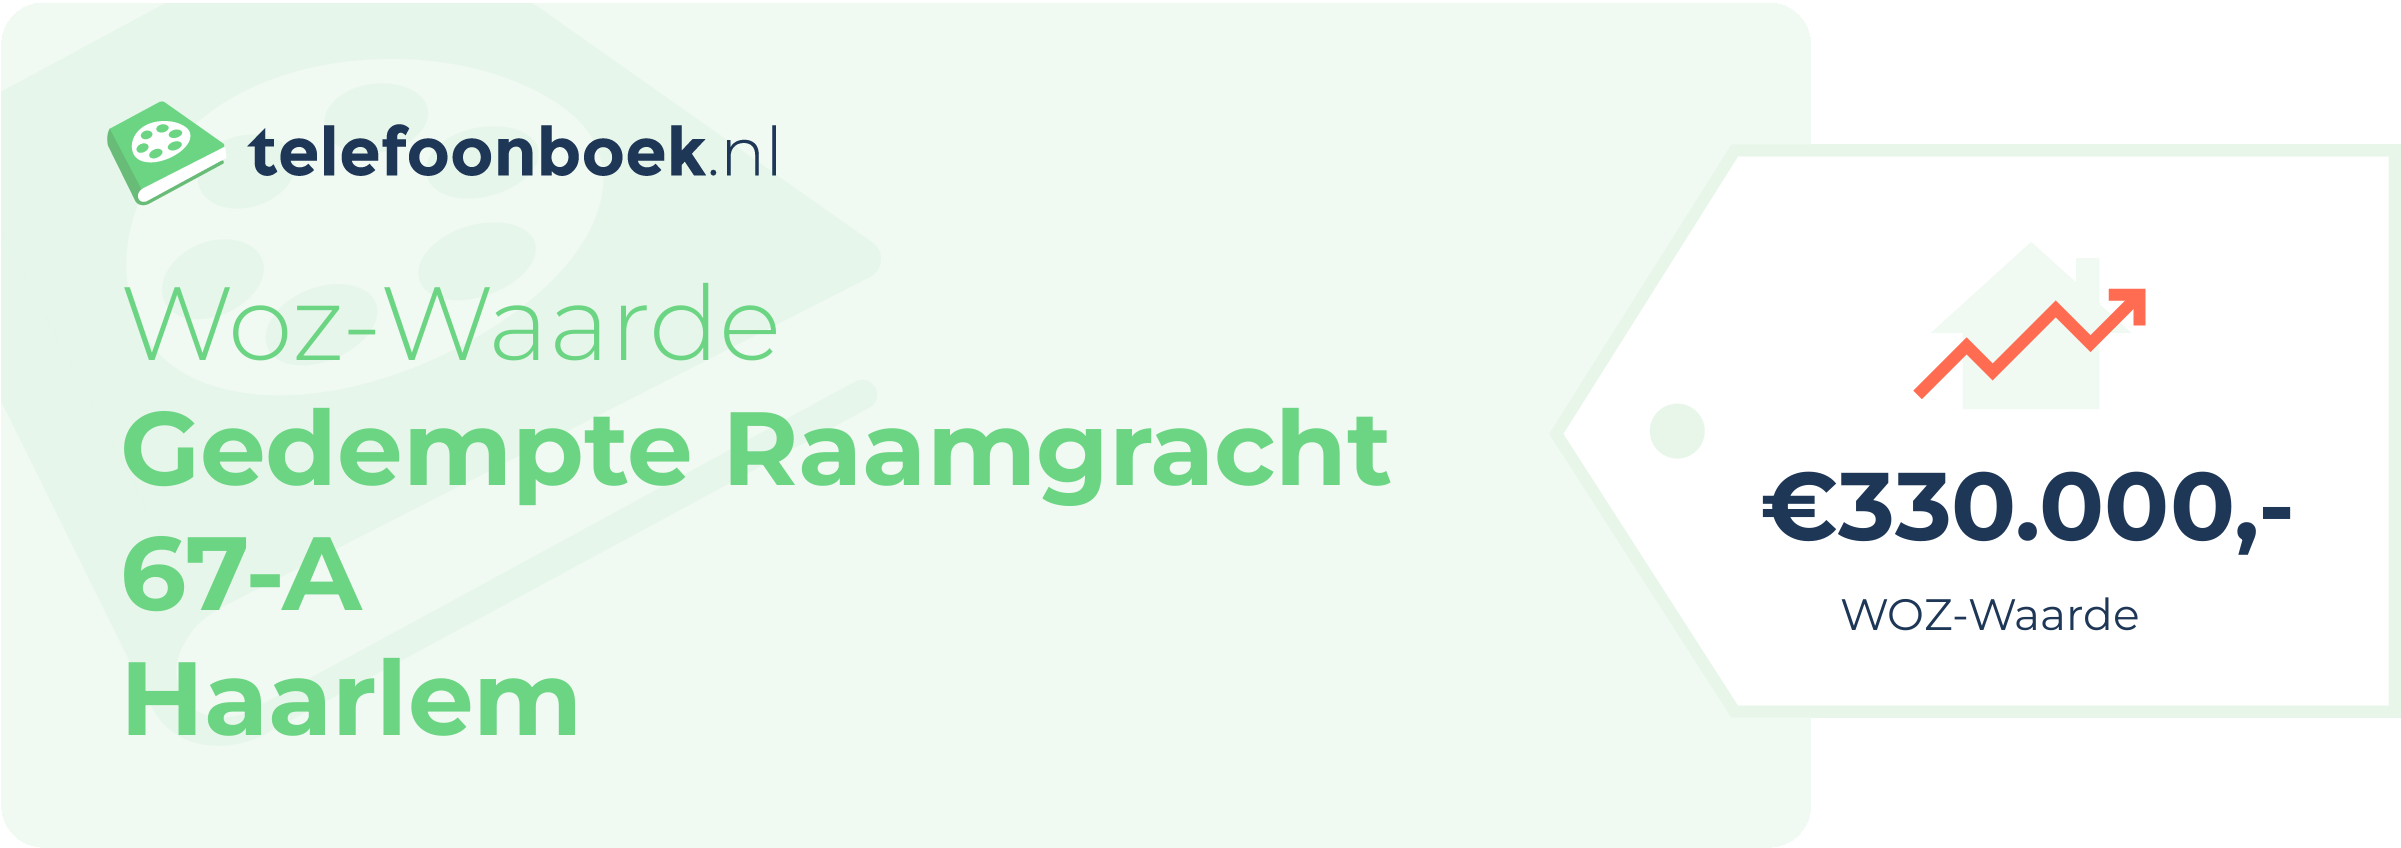 WOZ-waarde Gedempte Raamgracht 67-A Haarlem